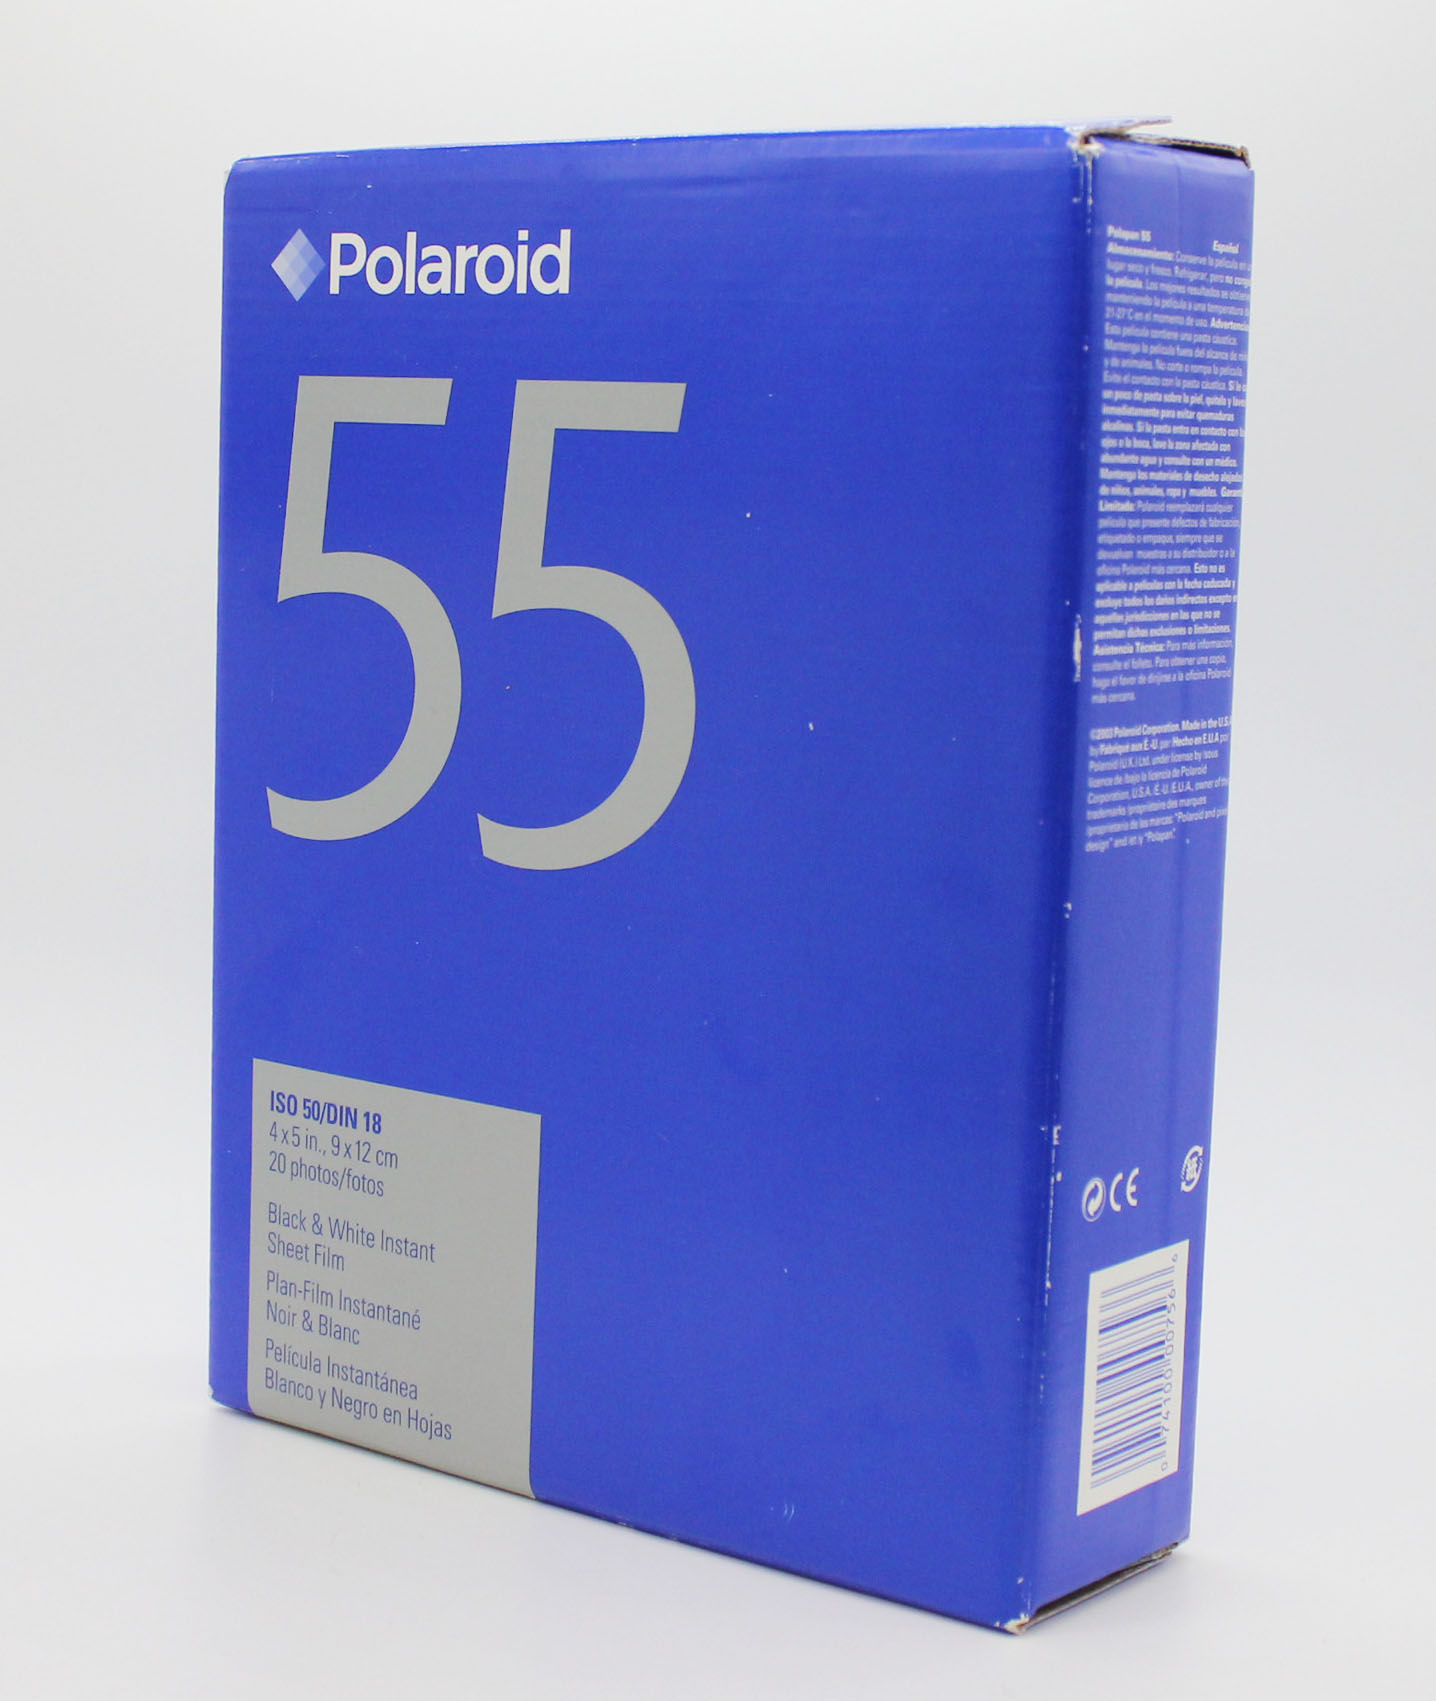 [Unused] Polaroid 55 4x5in. 9x12cm B&W Black & White Instant Sheet Film 20photos Expired 11/06 from Japan